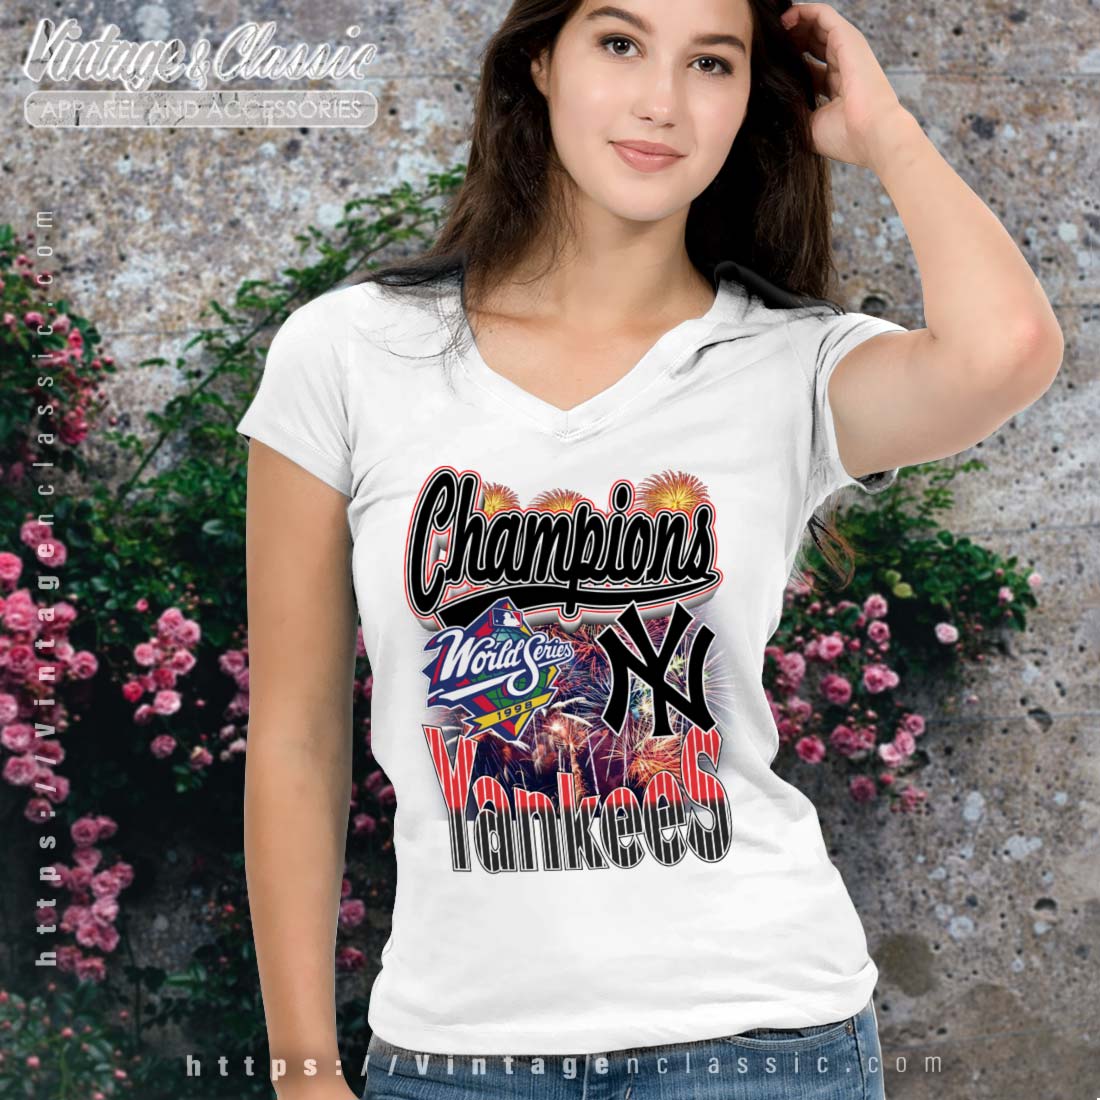 1998 New York Yankees World Series Champs Starter MLB T-Shirt Size Large